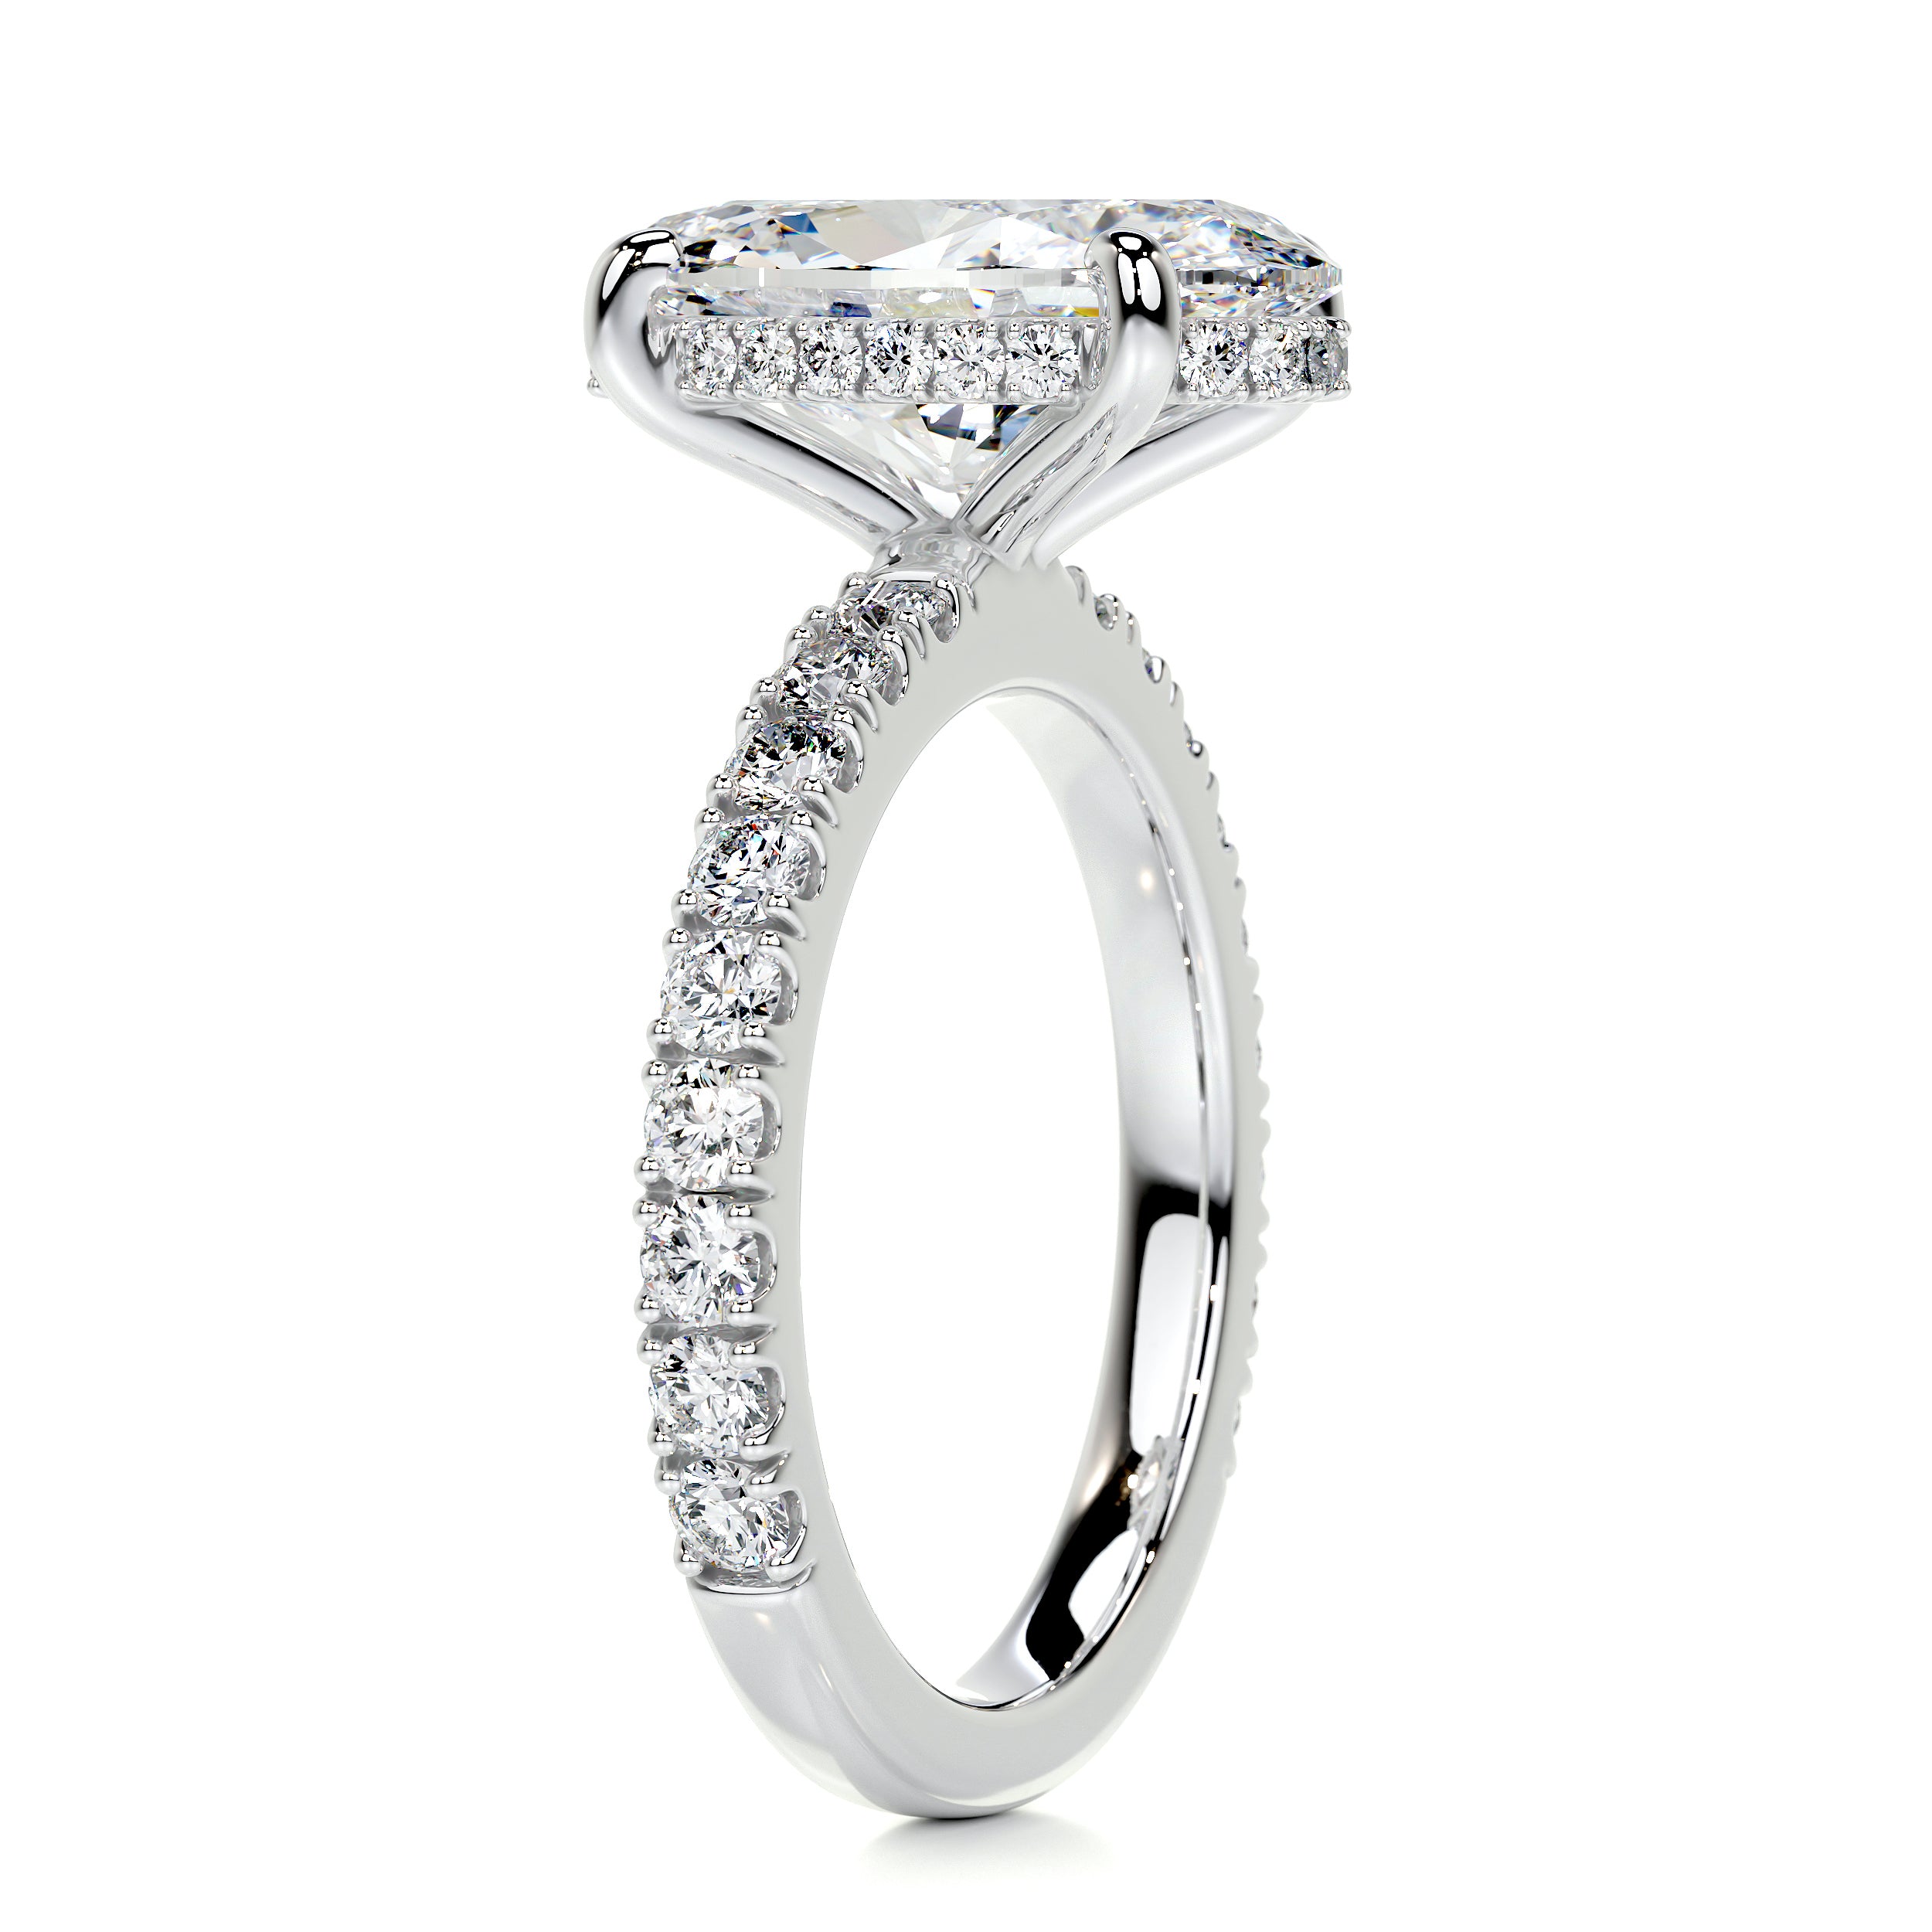 Lucy Diamond Engagement Ring   (3.5 Carat) -14K White Gold